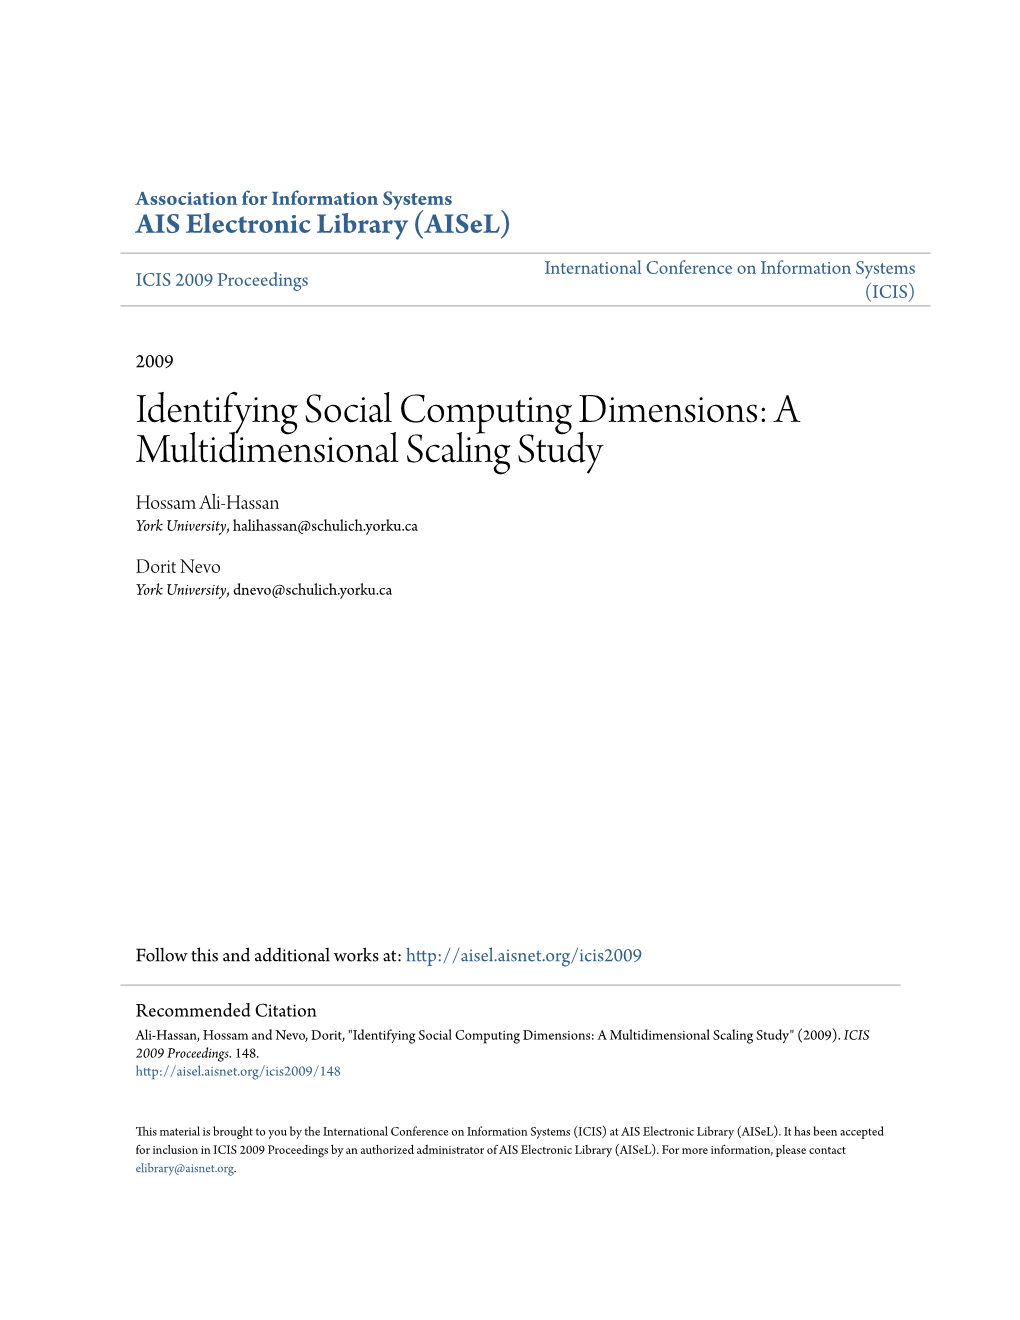 Identifying Social Computing Dimensions: a Multidimensional Scaling Study Hossam Ali-Hassan York University, Halihassan@Schulich.Yorku.Ca